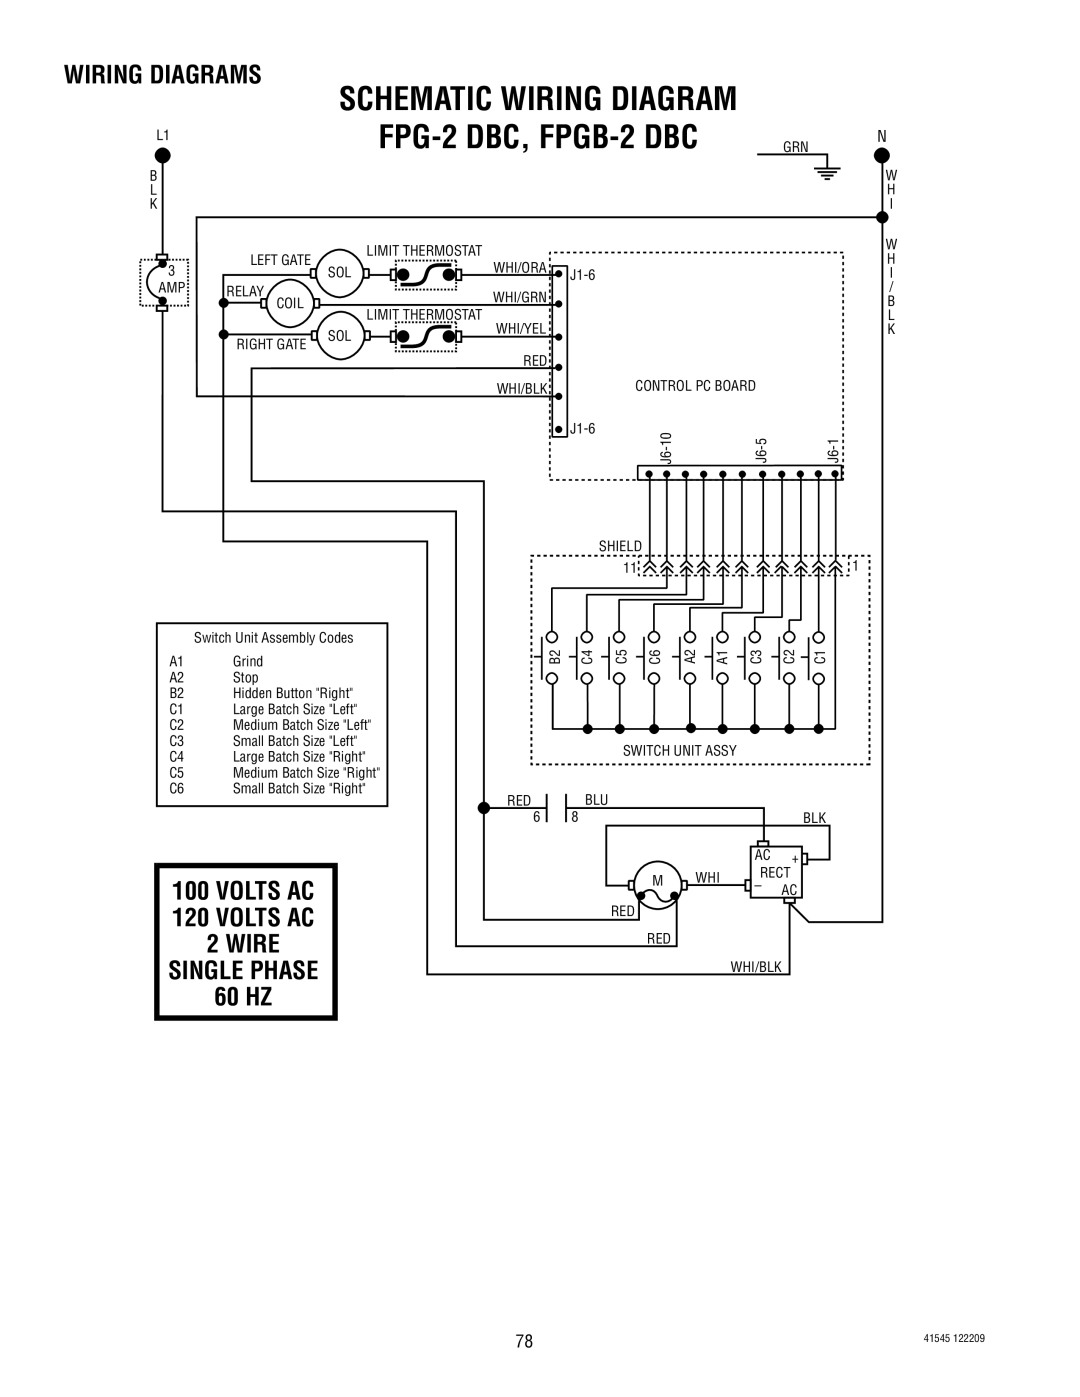 Bunn G9WD FPG-2DBC, FPGB-2DBC, VOLTS AC 120 VOLTS AC 2WIRE SINGLE PHASE, 60 HZ, Wiring Diagrams, Schematic Wiring Diagram 